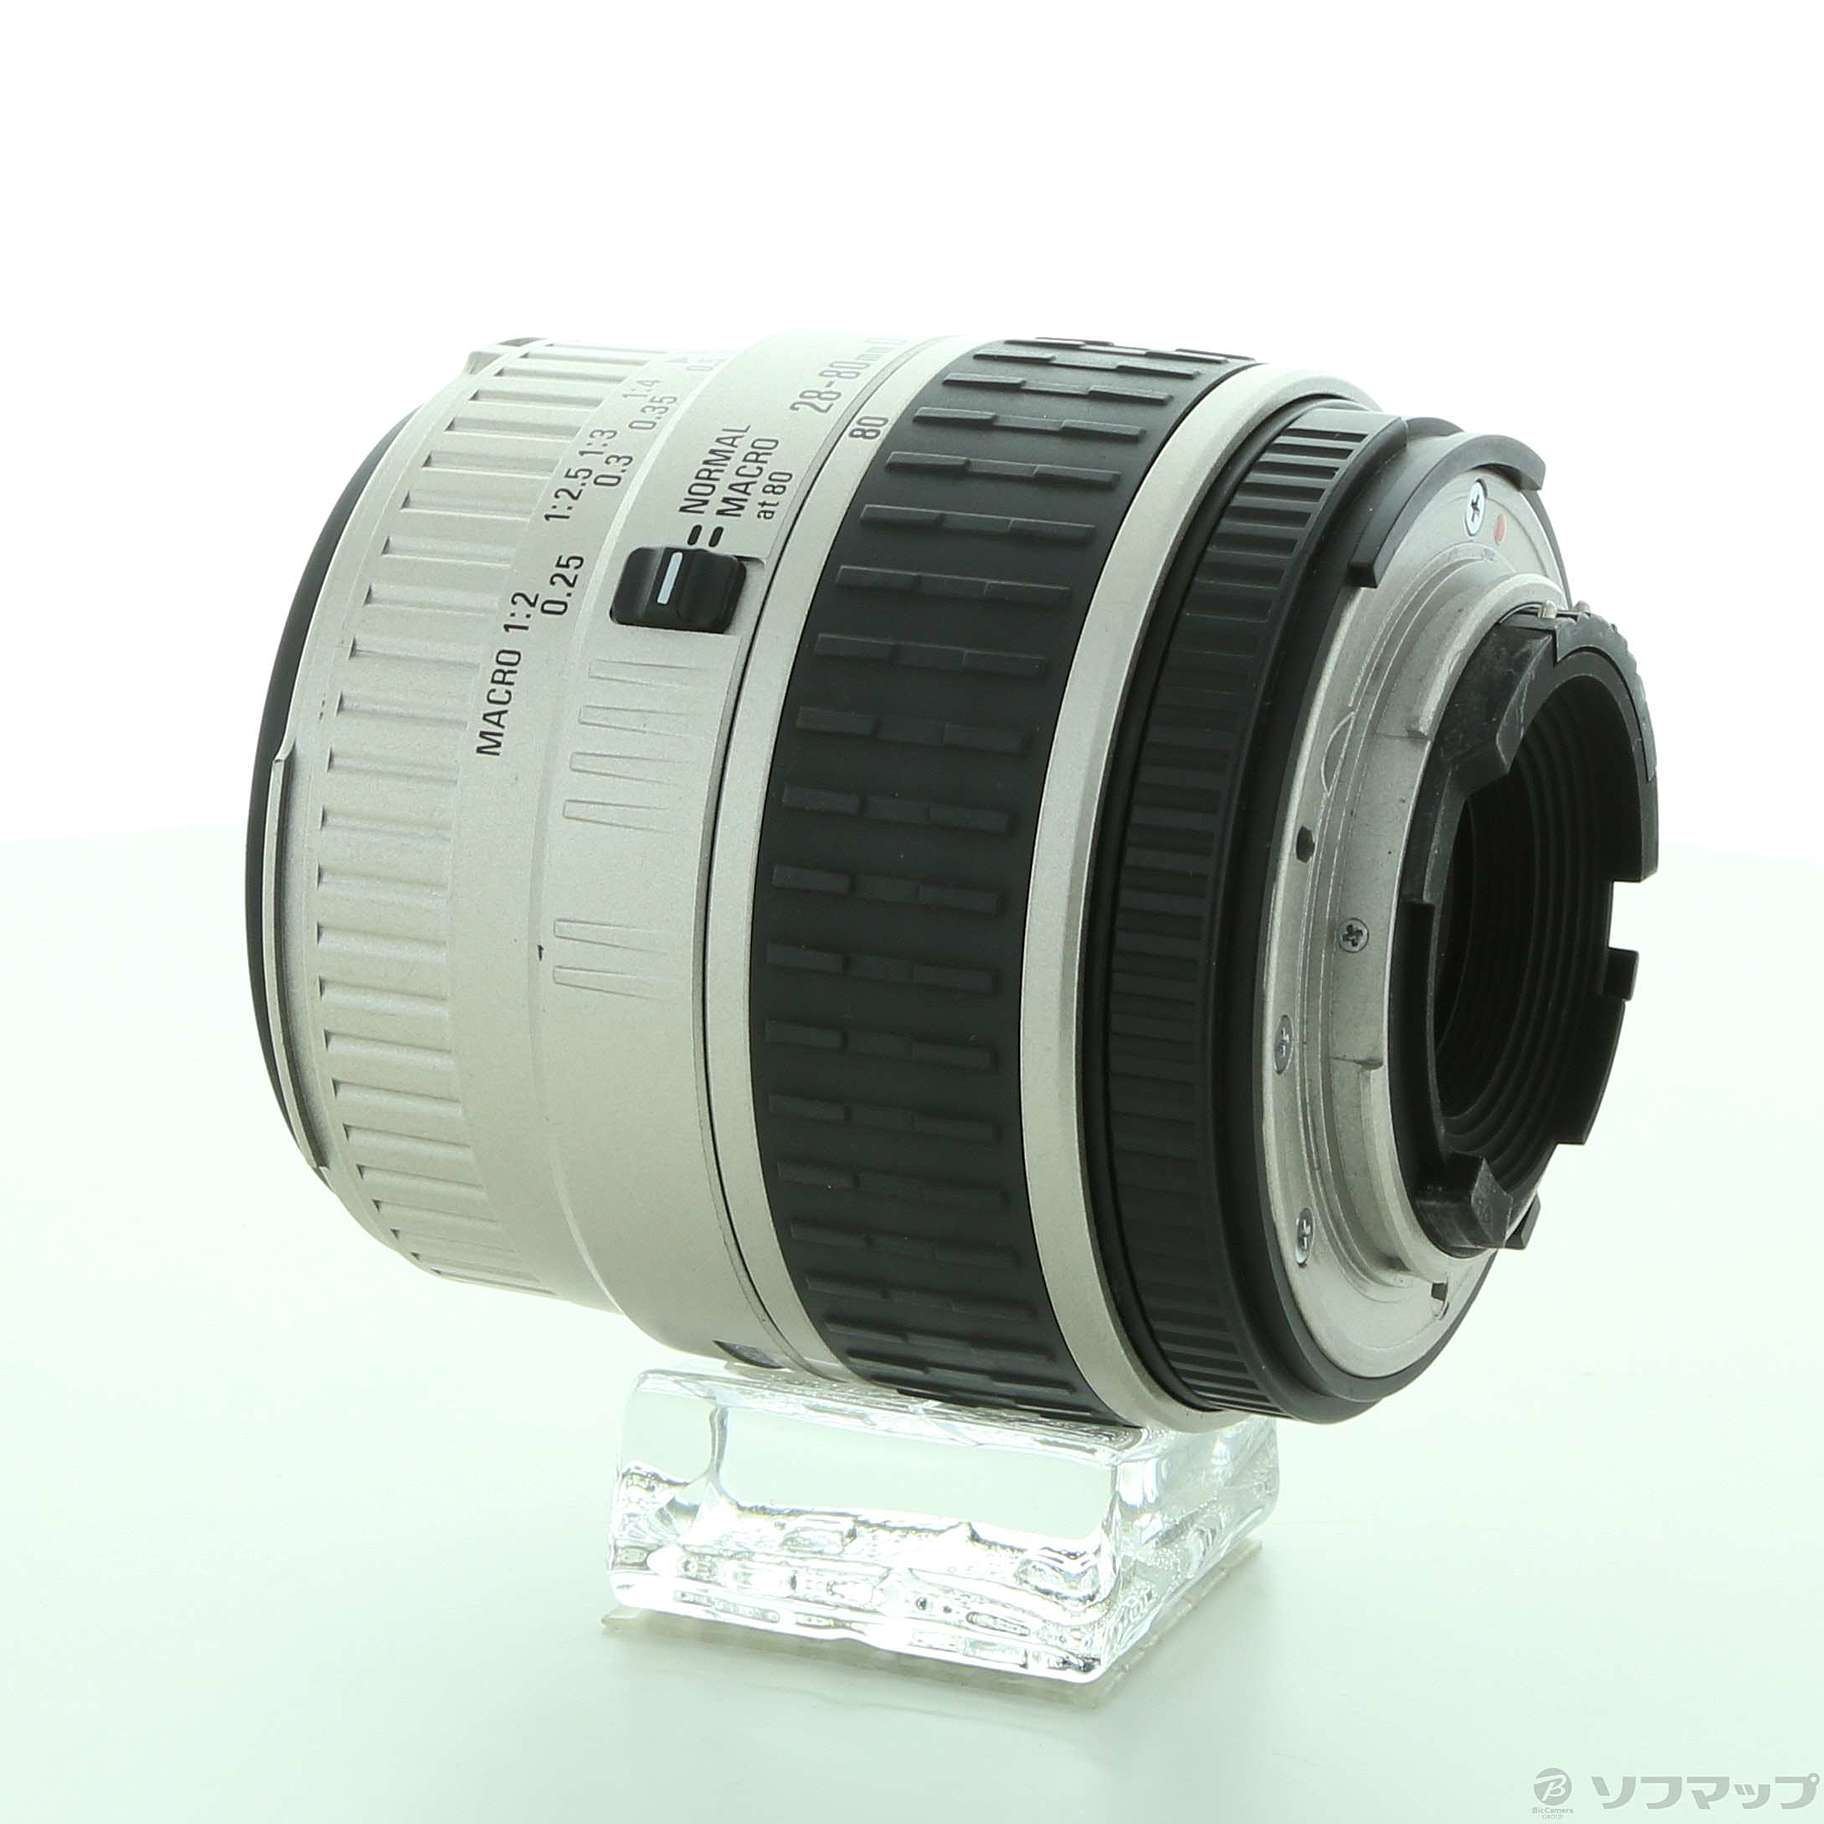 Sigma Zoom 28-80mm D F3.5-5.6 II Macro Aspherical